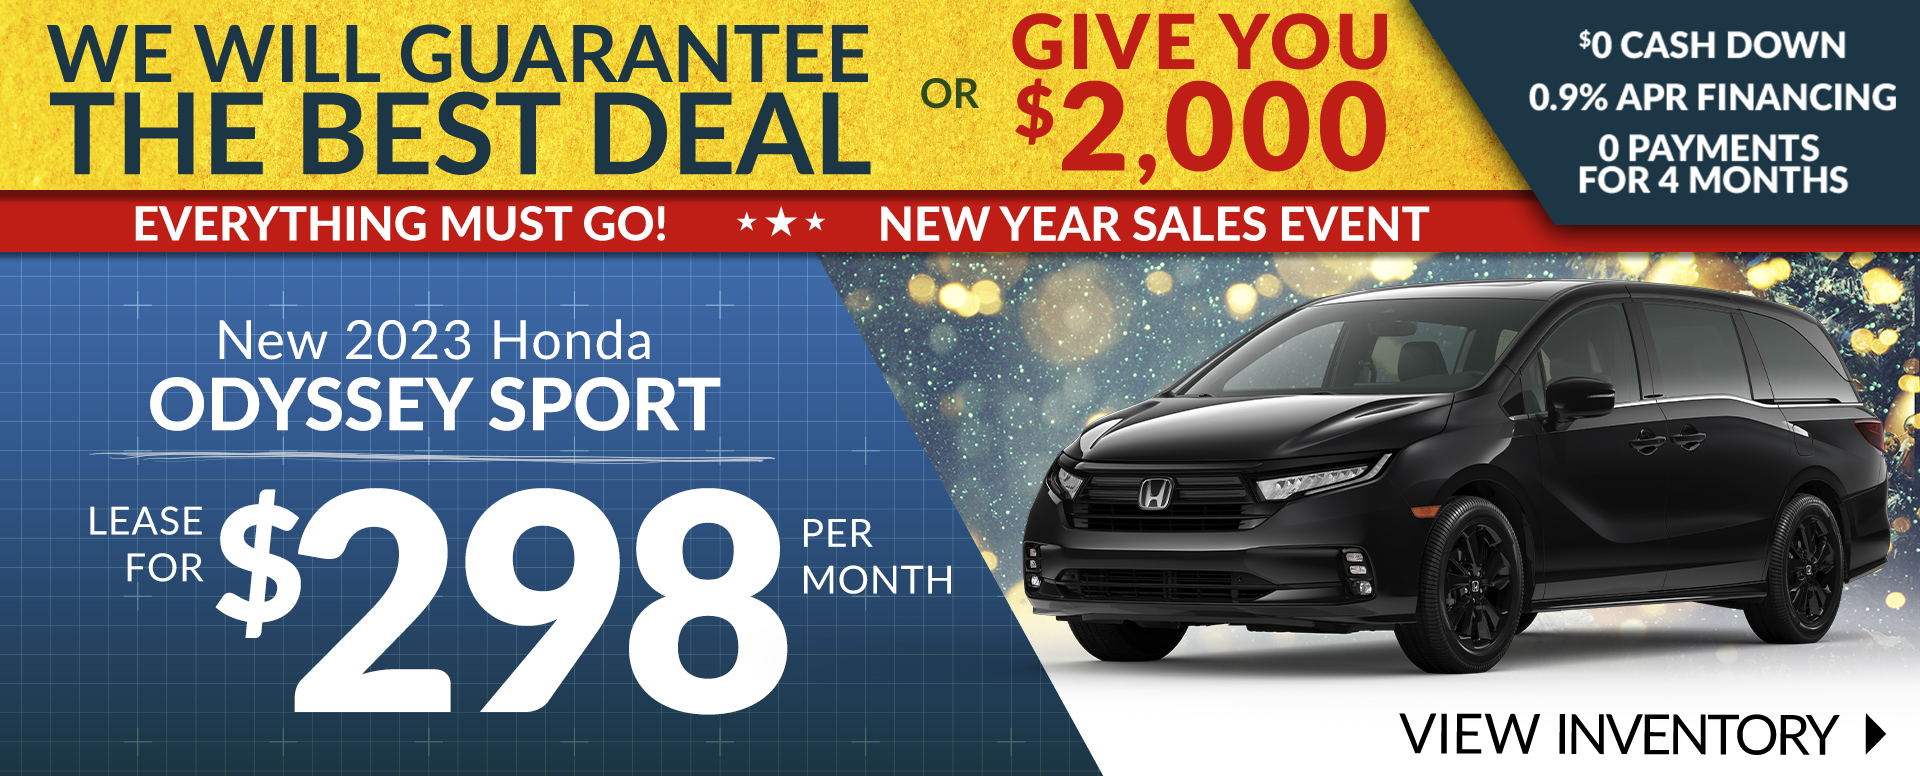 Honda Odyssey Offer